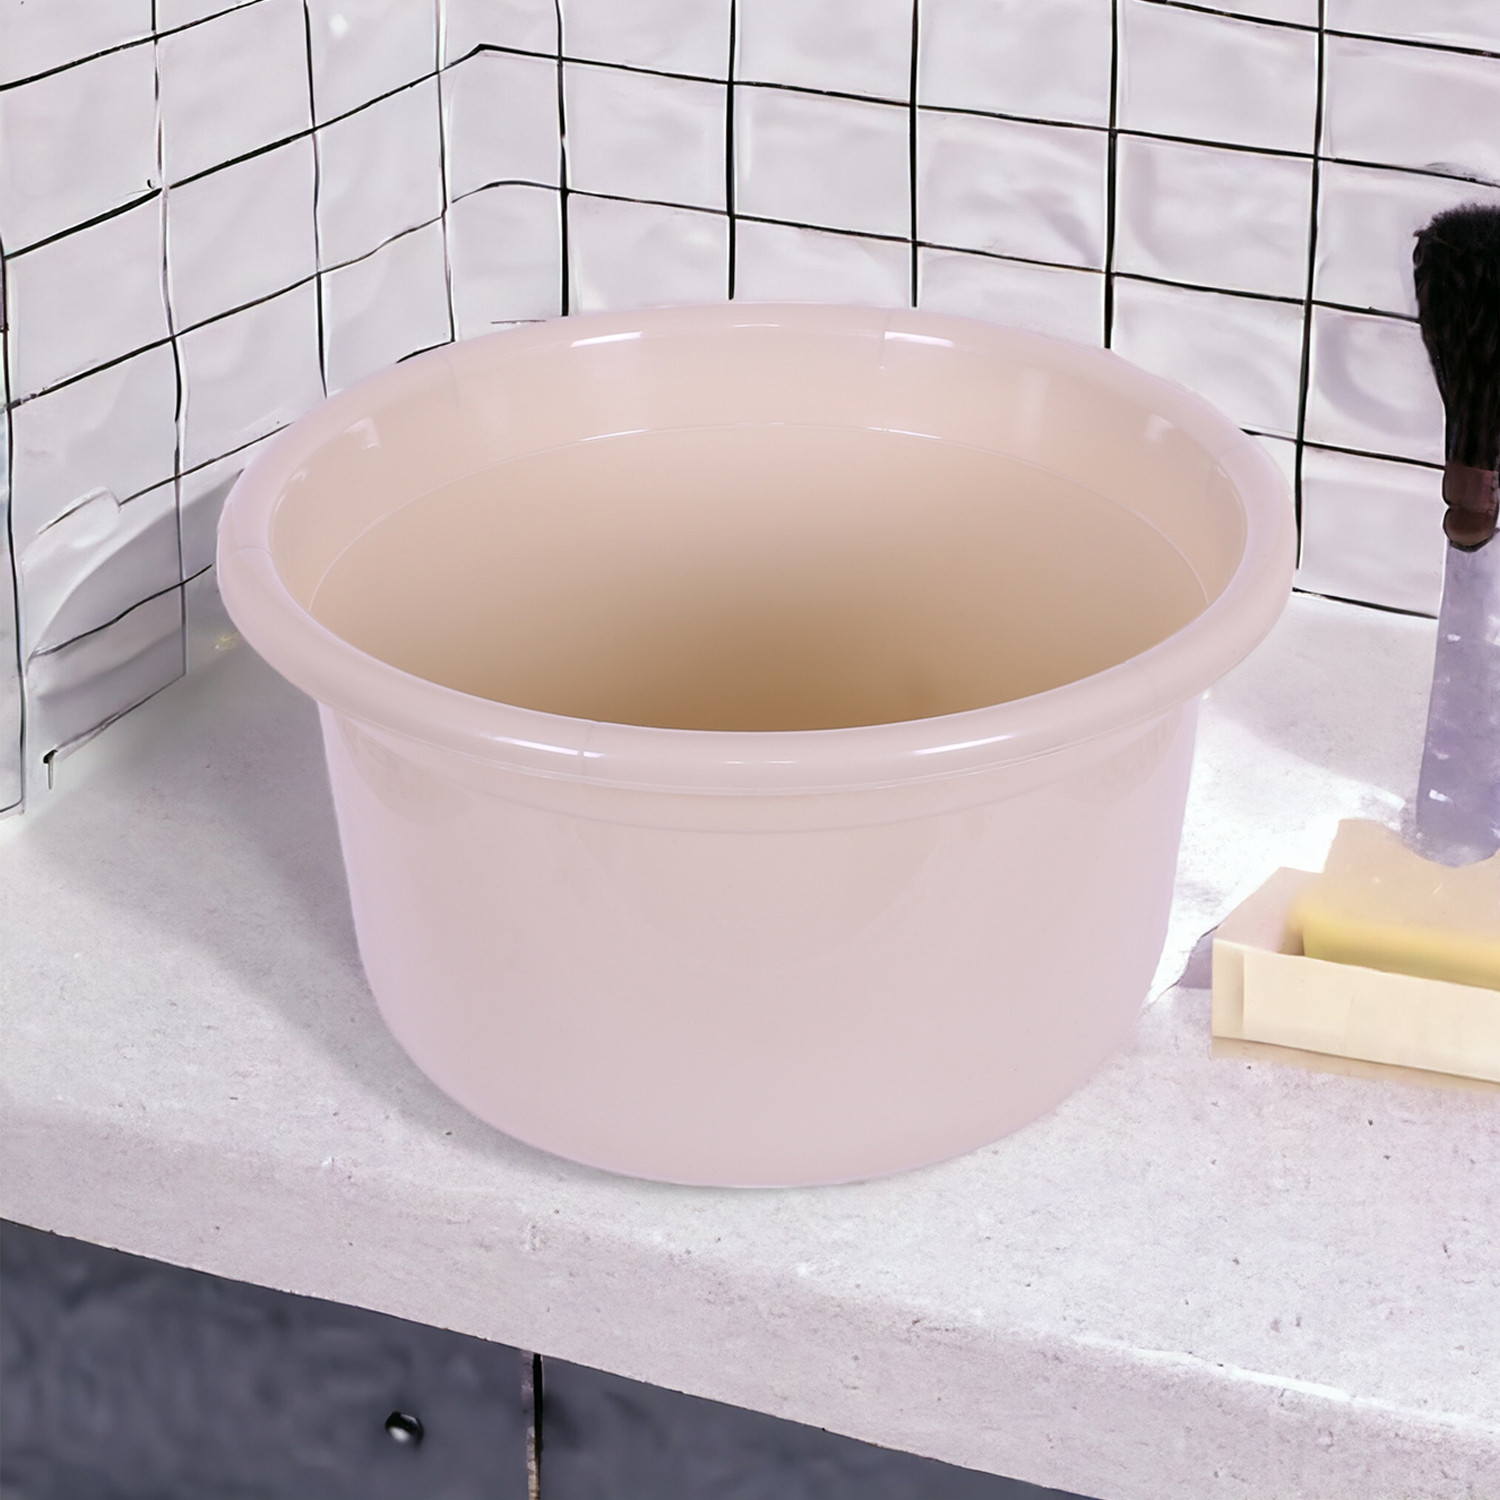 Kuber Industries Bath Tub | Versatile Utility Gaint Tub | Plastic Bath Tub for Baby | Baby Bathing Tub | Clothes Washing Tub For Bathroom | Feeding Pan Tub | TUB-25 LTR | Beige